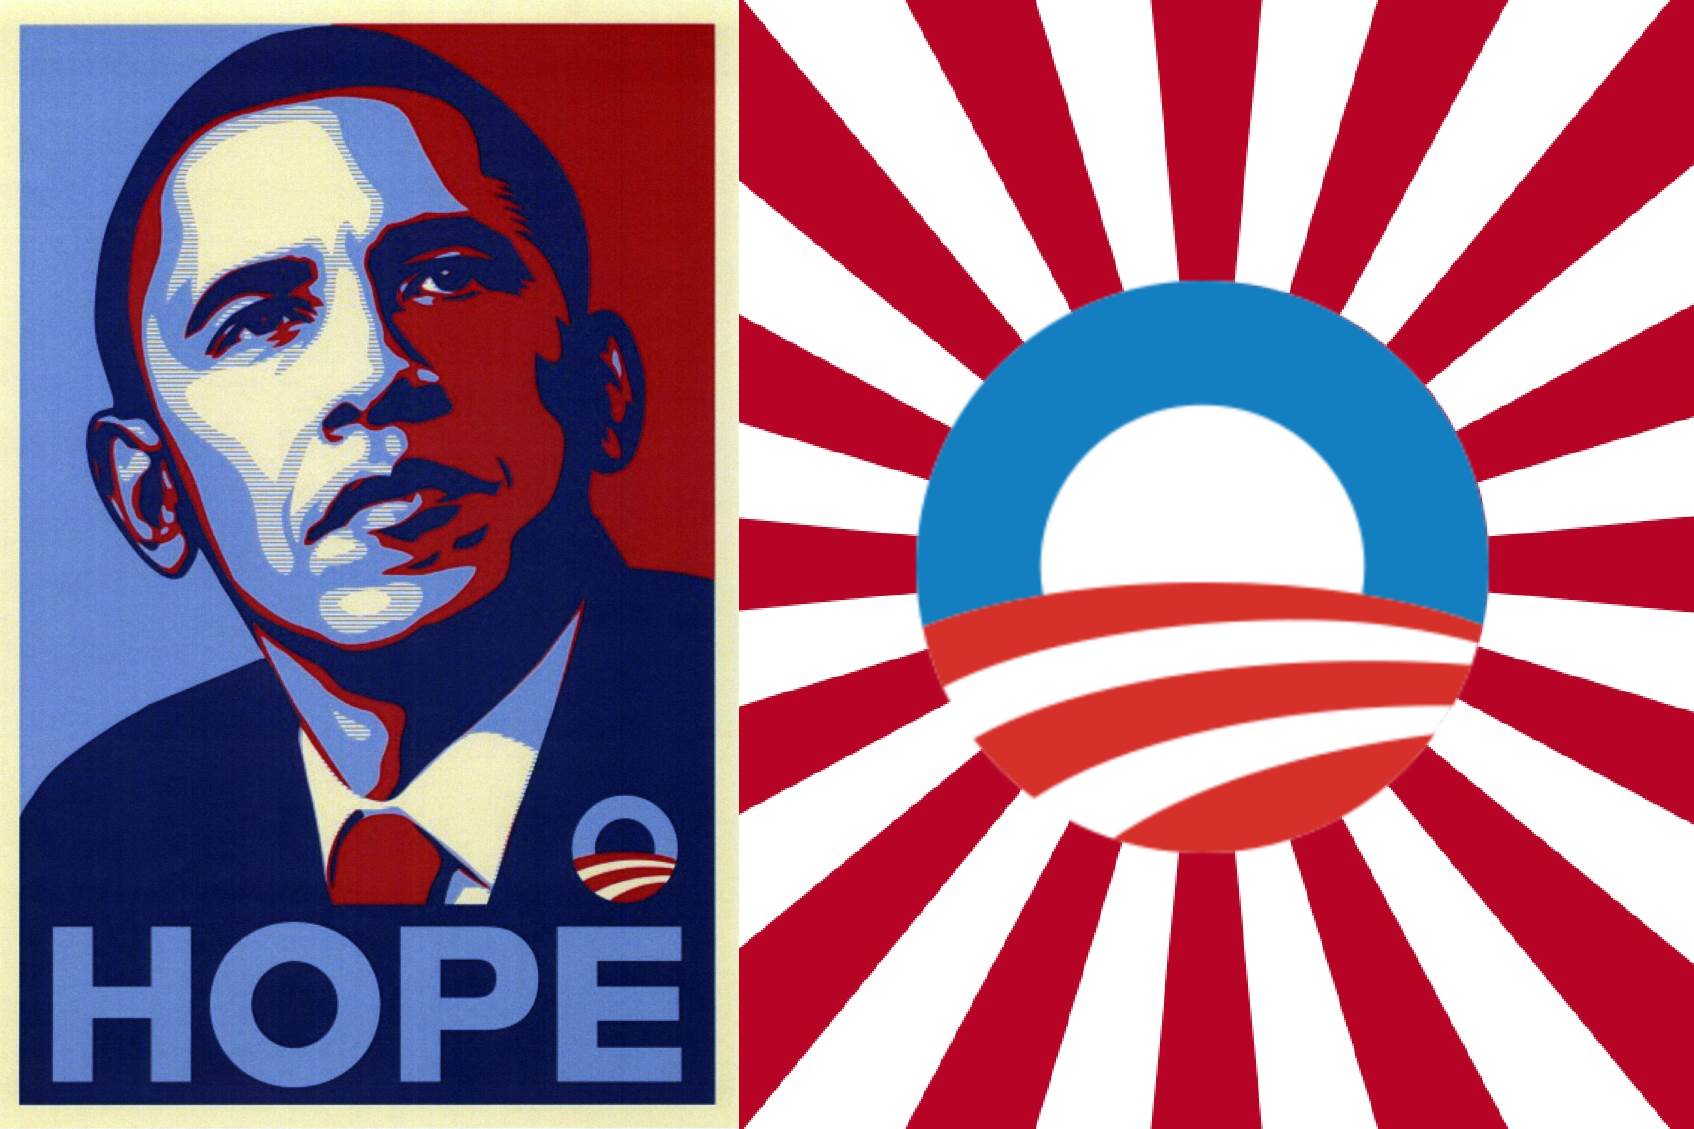 Obama Logo - obama logo and rising sun